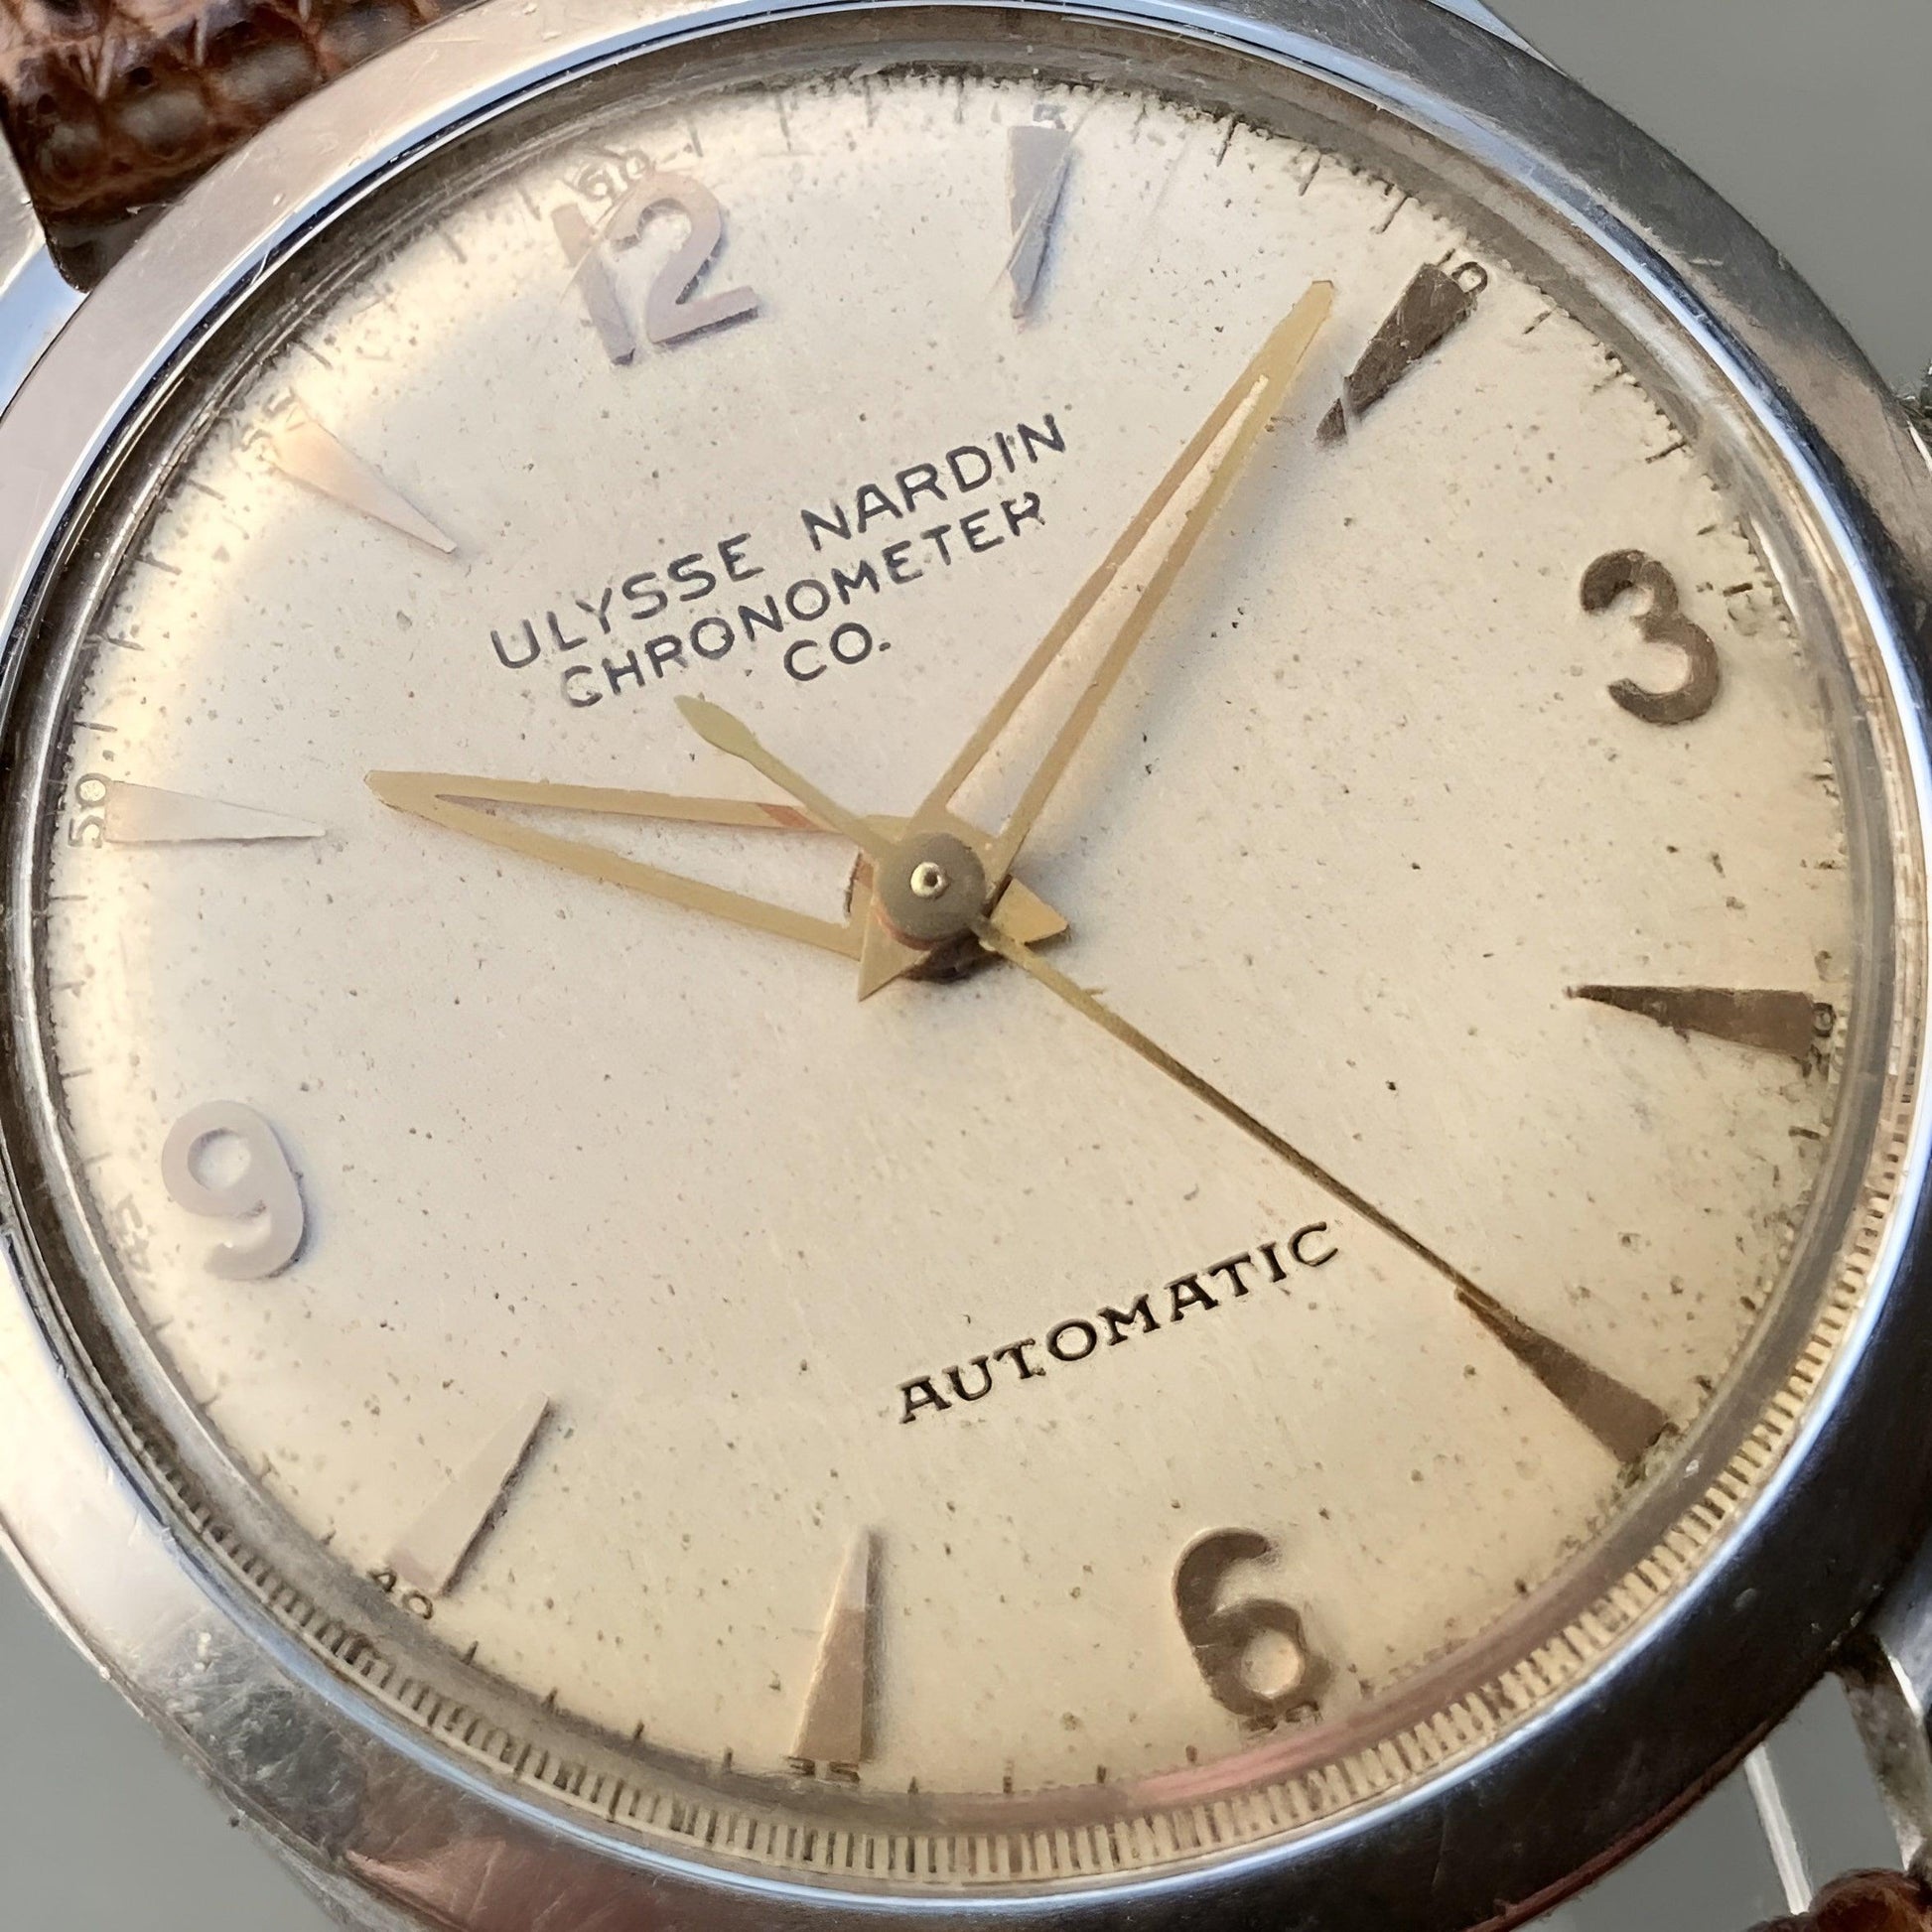 Ulysse Nardin Watch Antique Automatic Men's 30mm Vintage Watch Men Women Ladies - Murphy Johnson Watches Co.